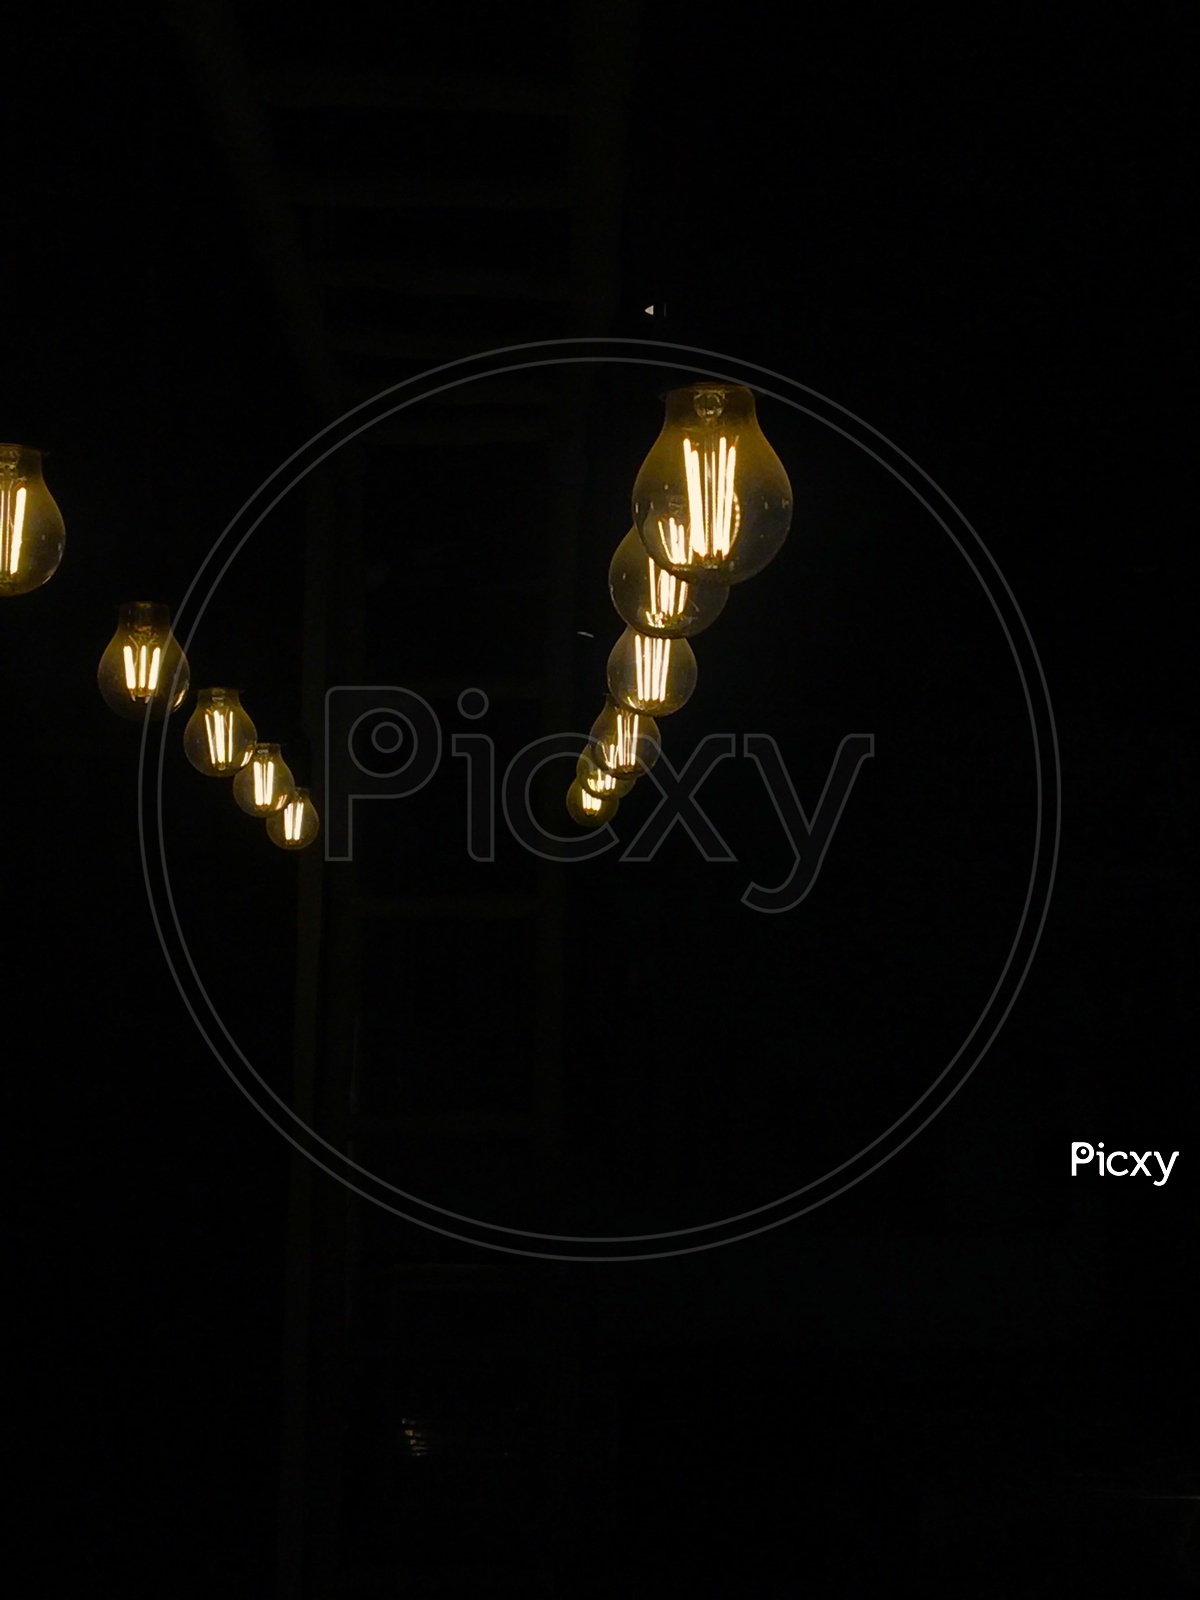 Bulbs,reflections,symmetry ,light